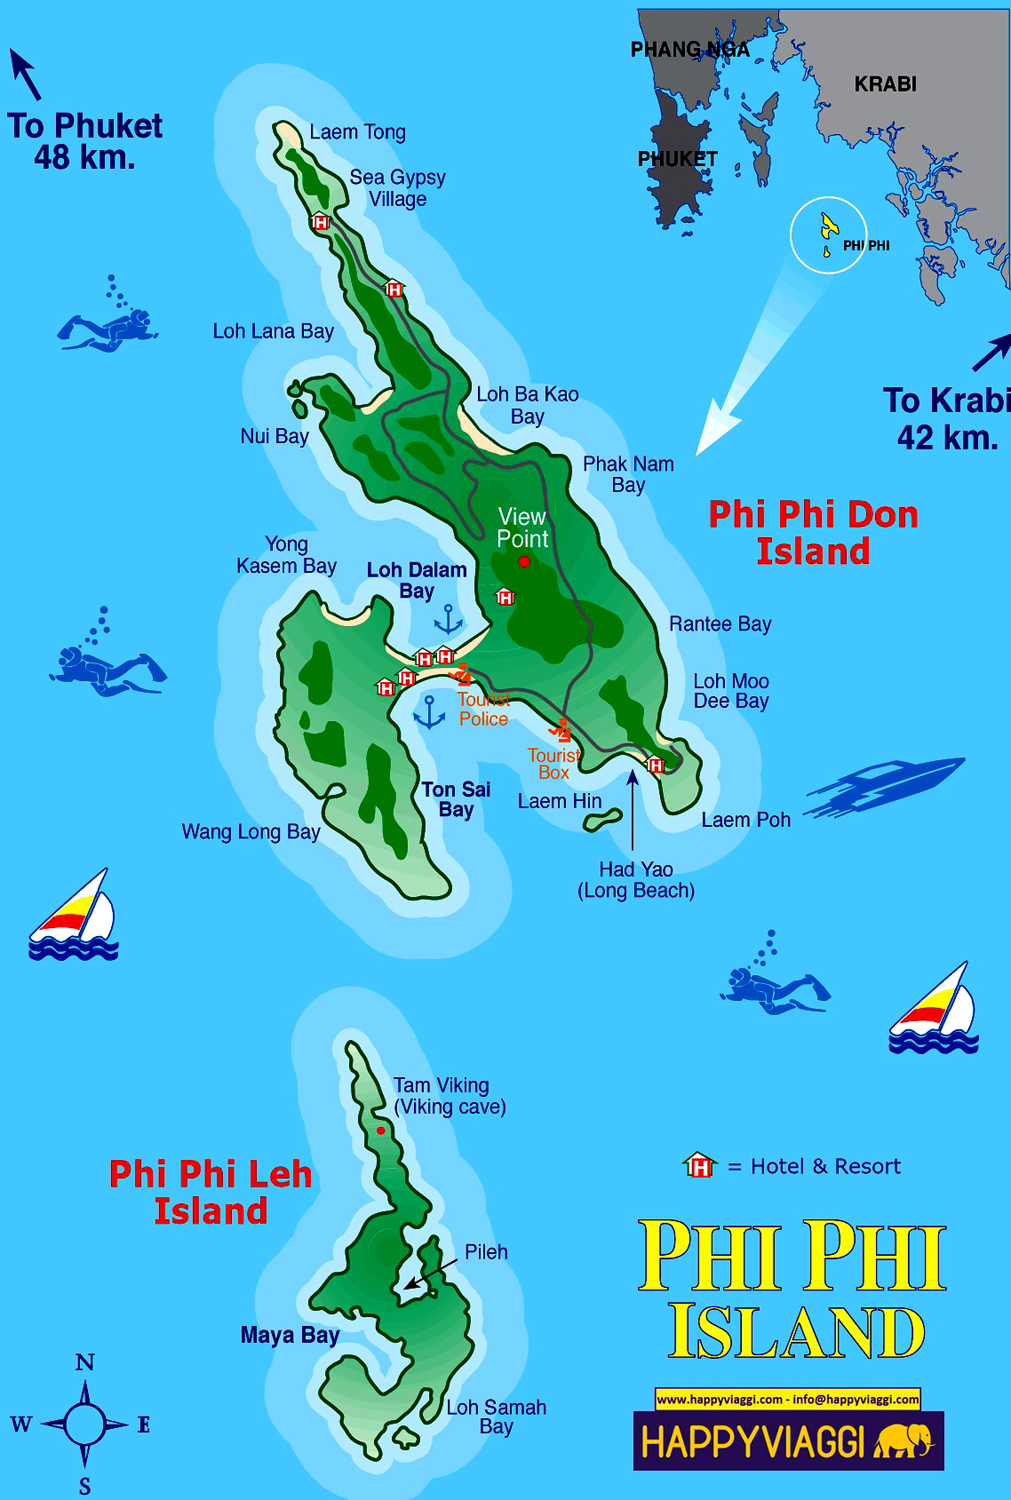 Isole Phi Phi Island: cartina geografica con le spiagge